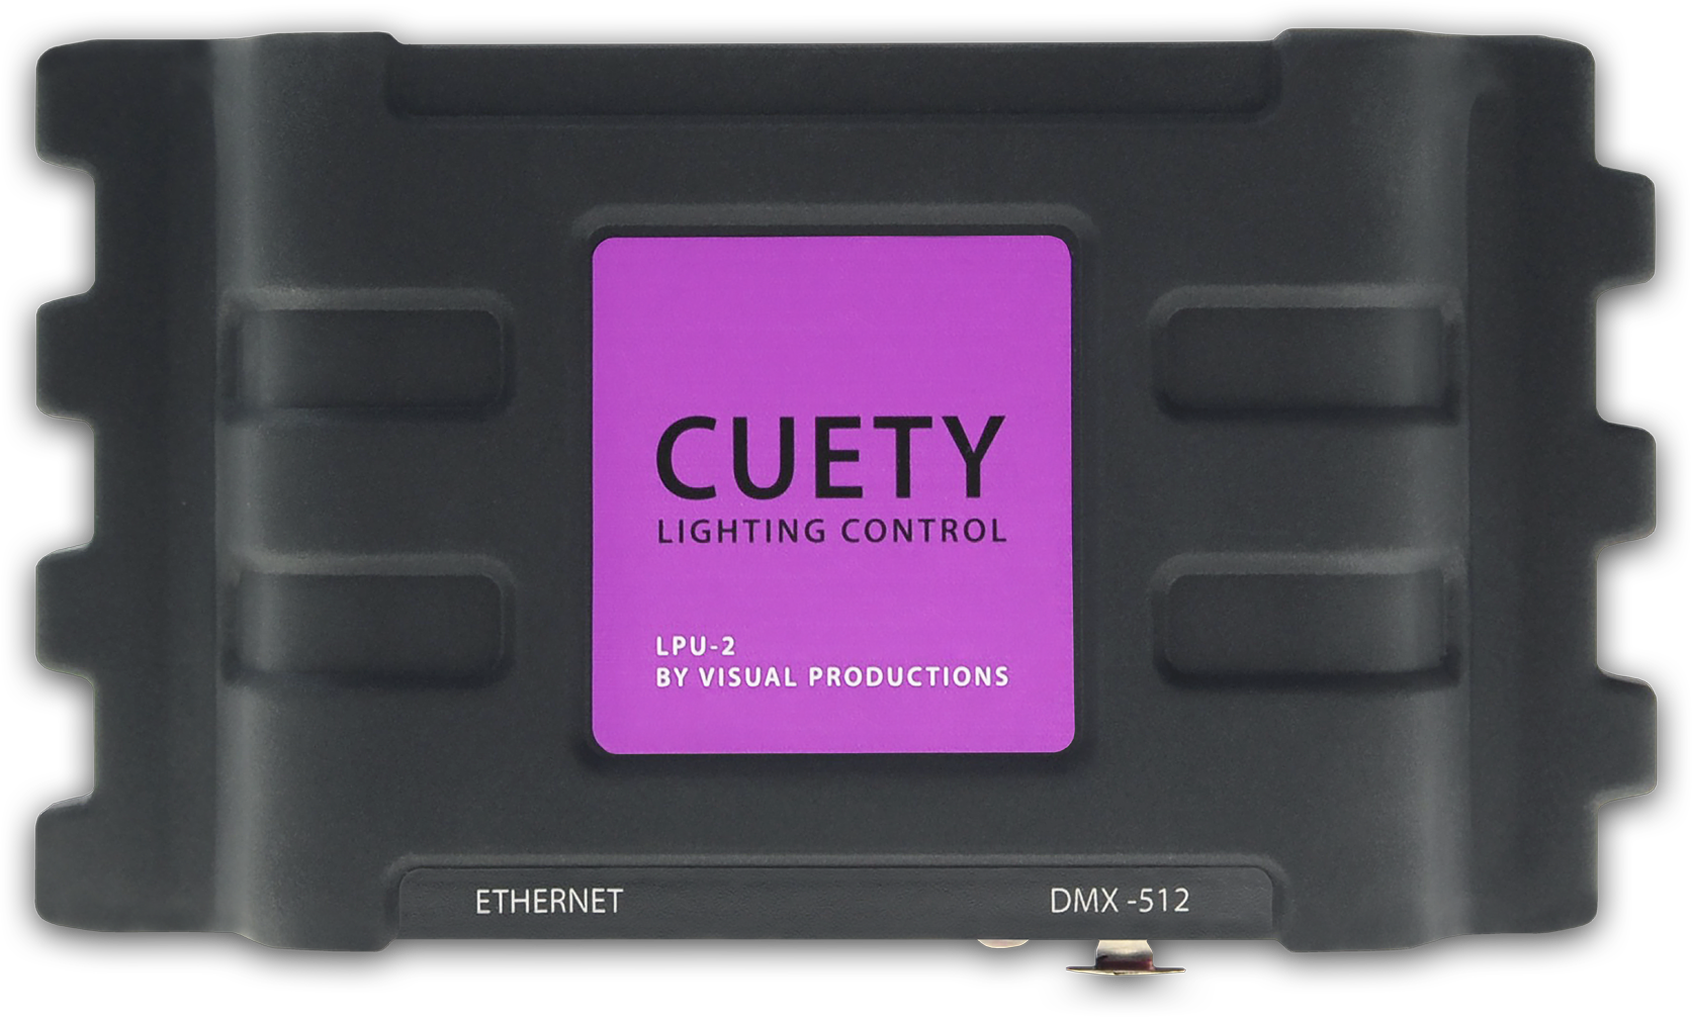 Cuety L P U2 Lighting Control Device PNG